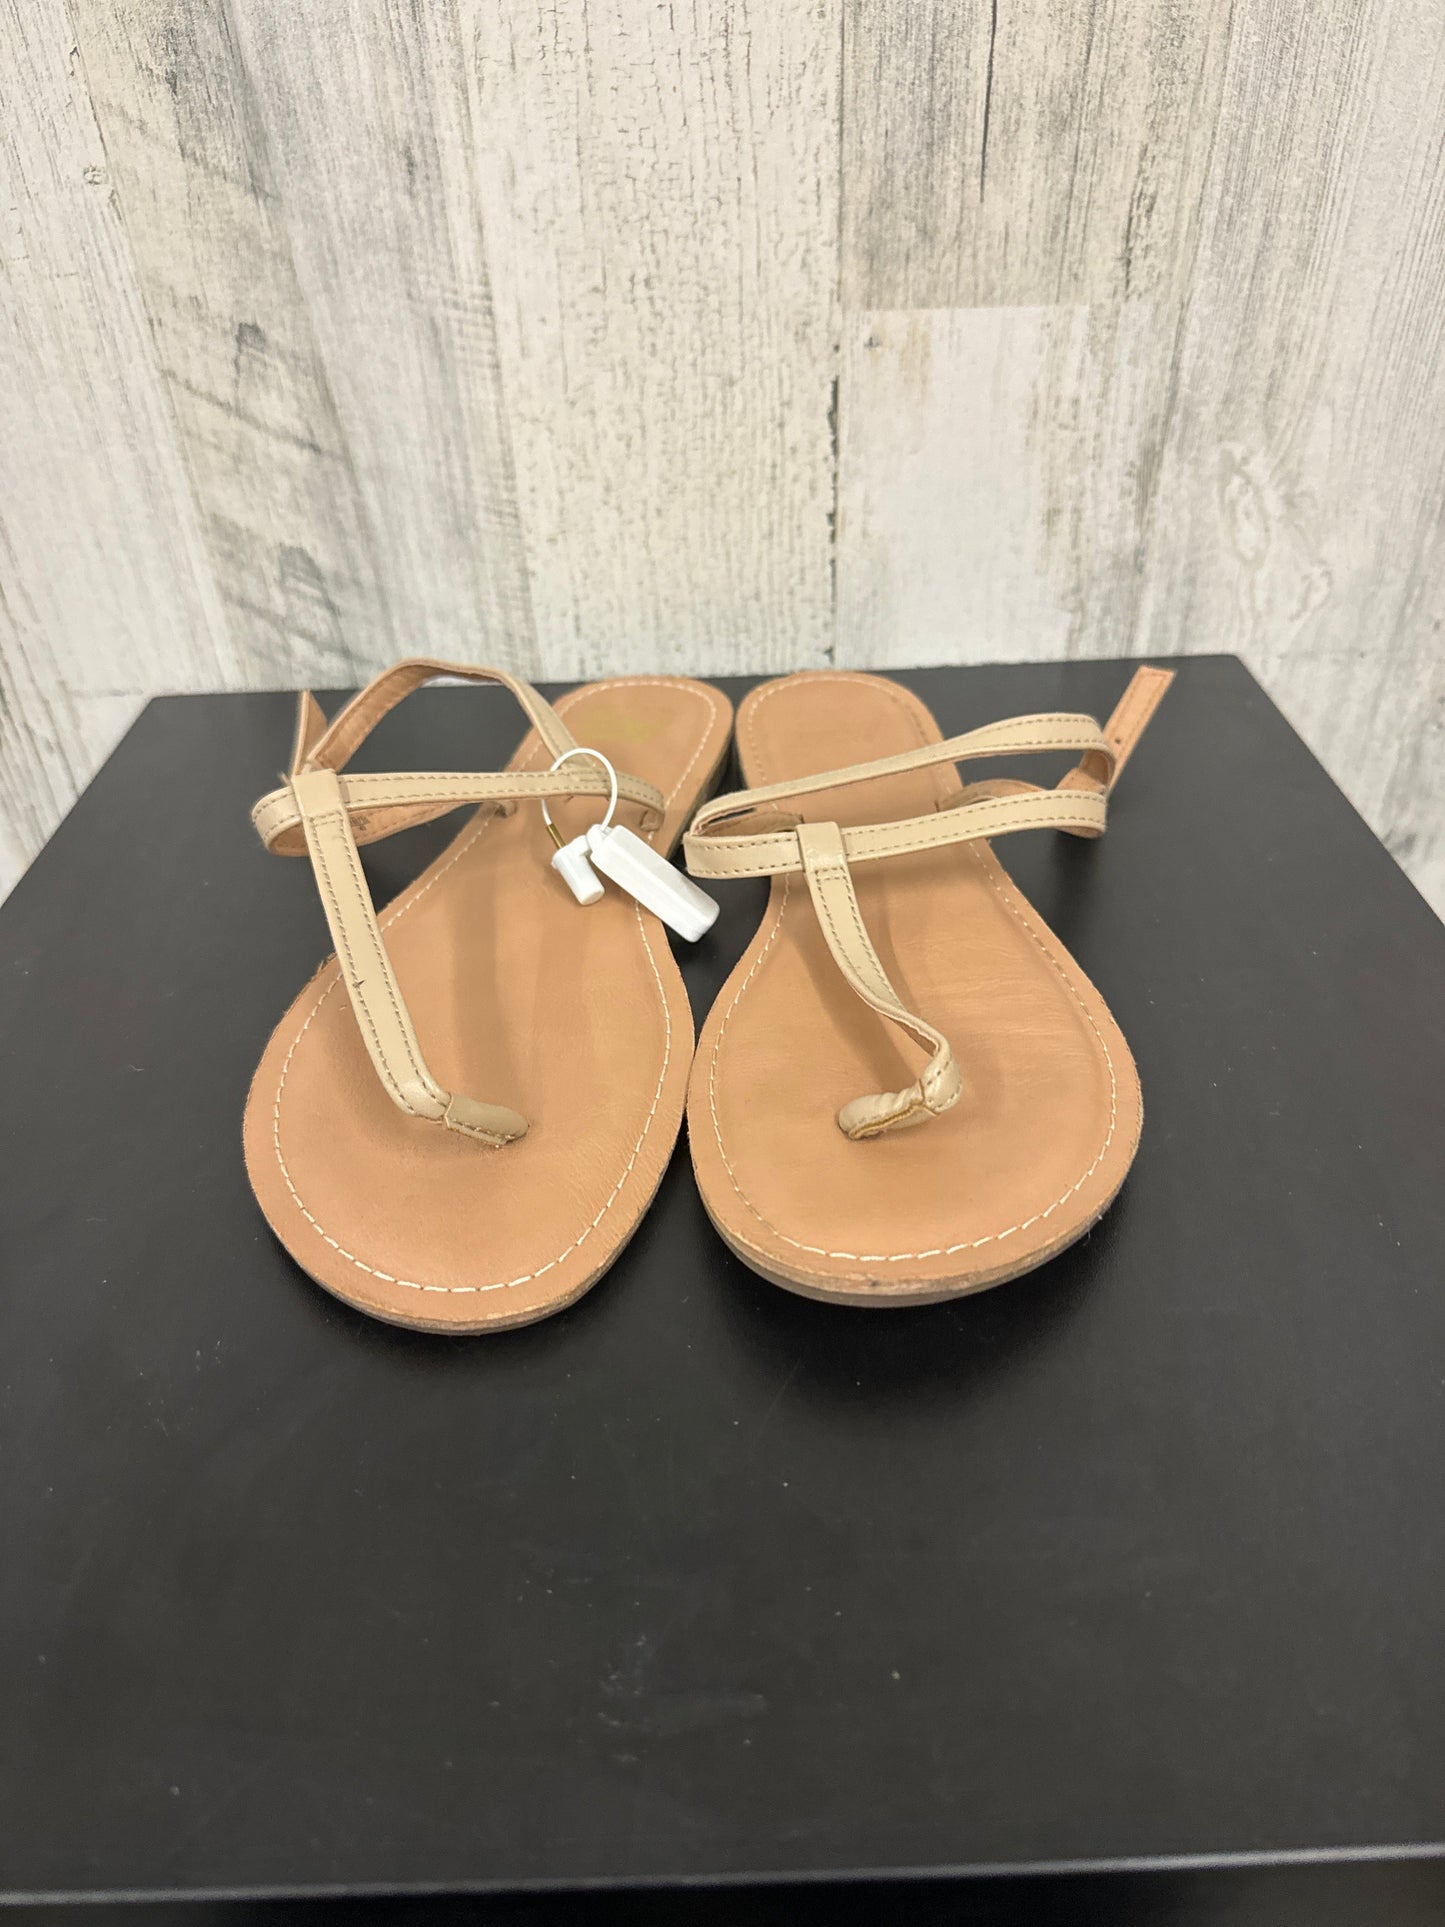 Sandals Flip Flops By American Eagle  Size: 9